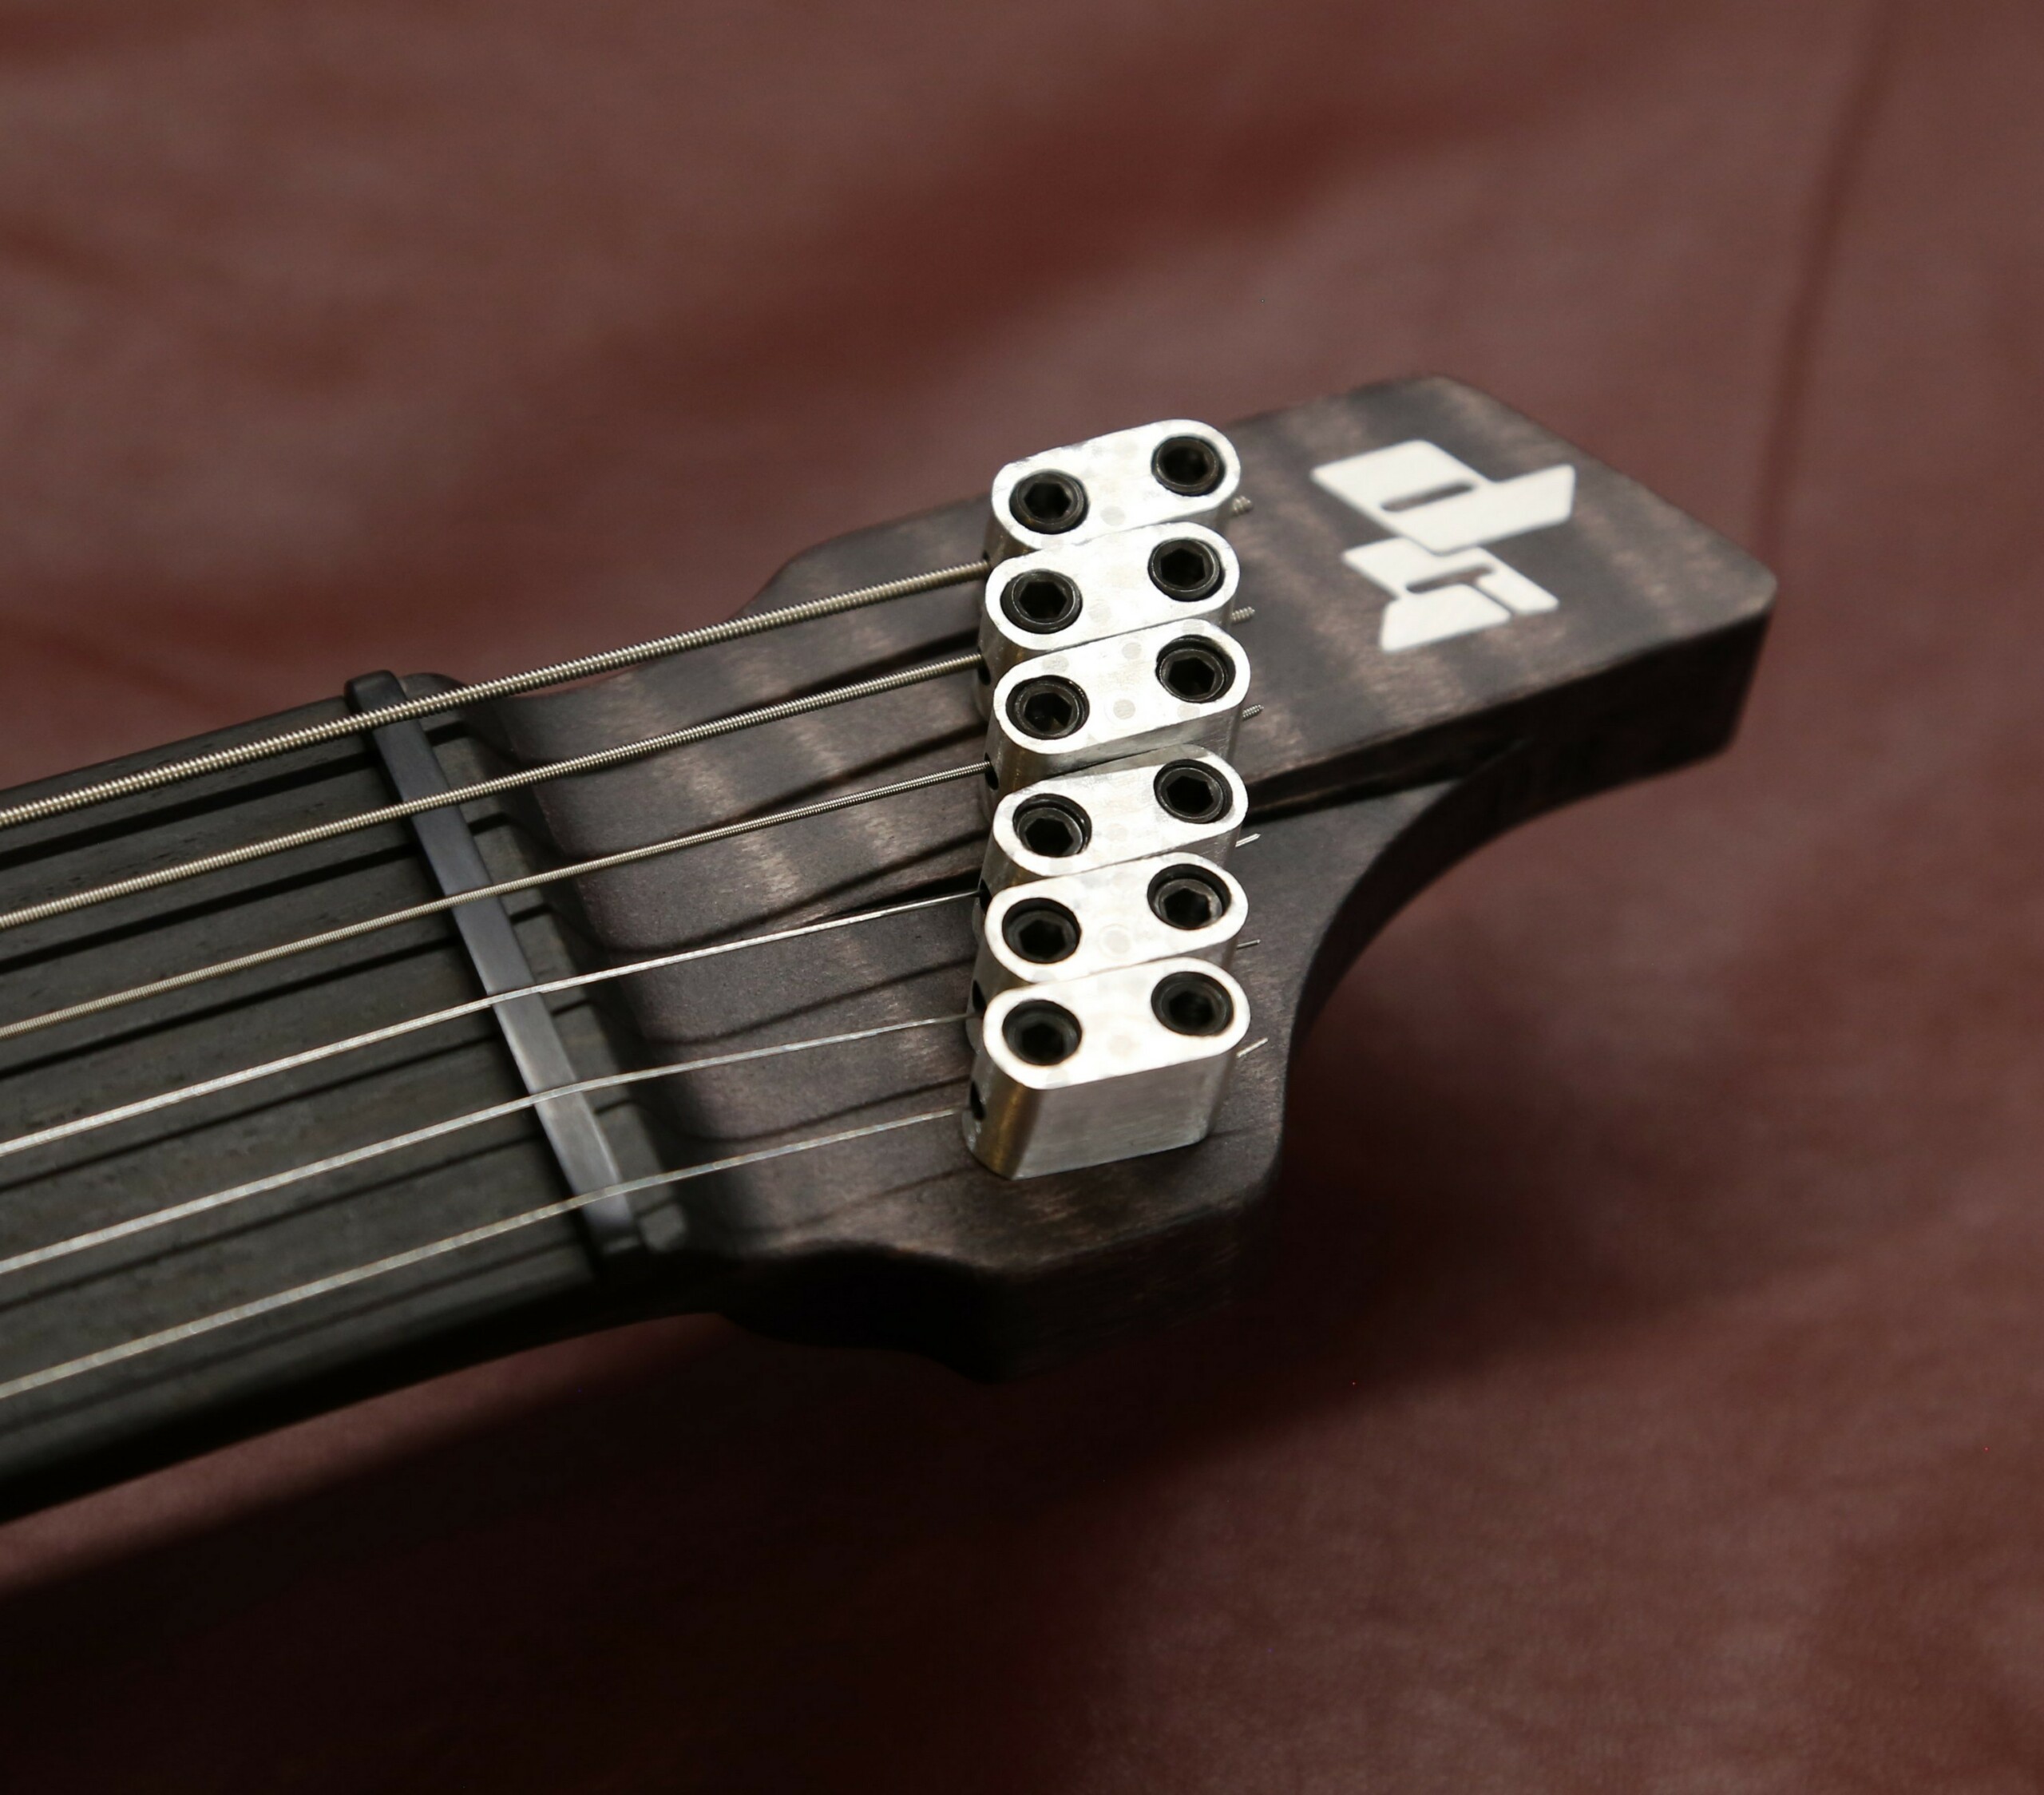 mclaren s speedtail hypercar inspired this xp2 custom built one off guitar 9 scaled